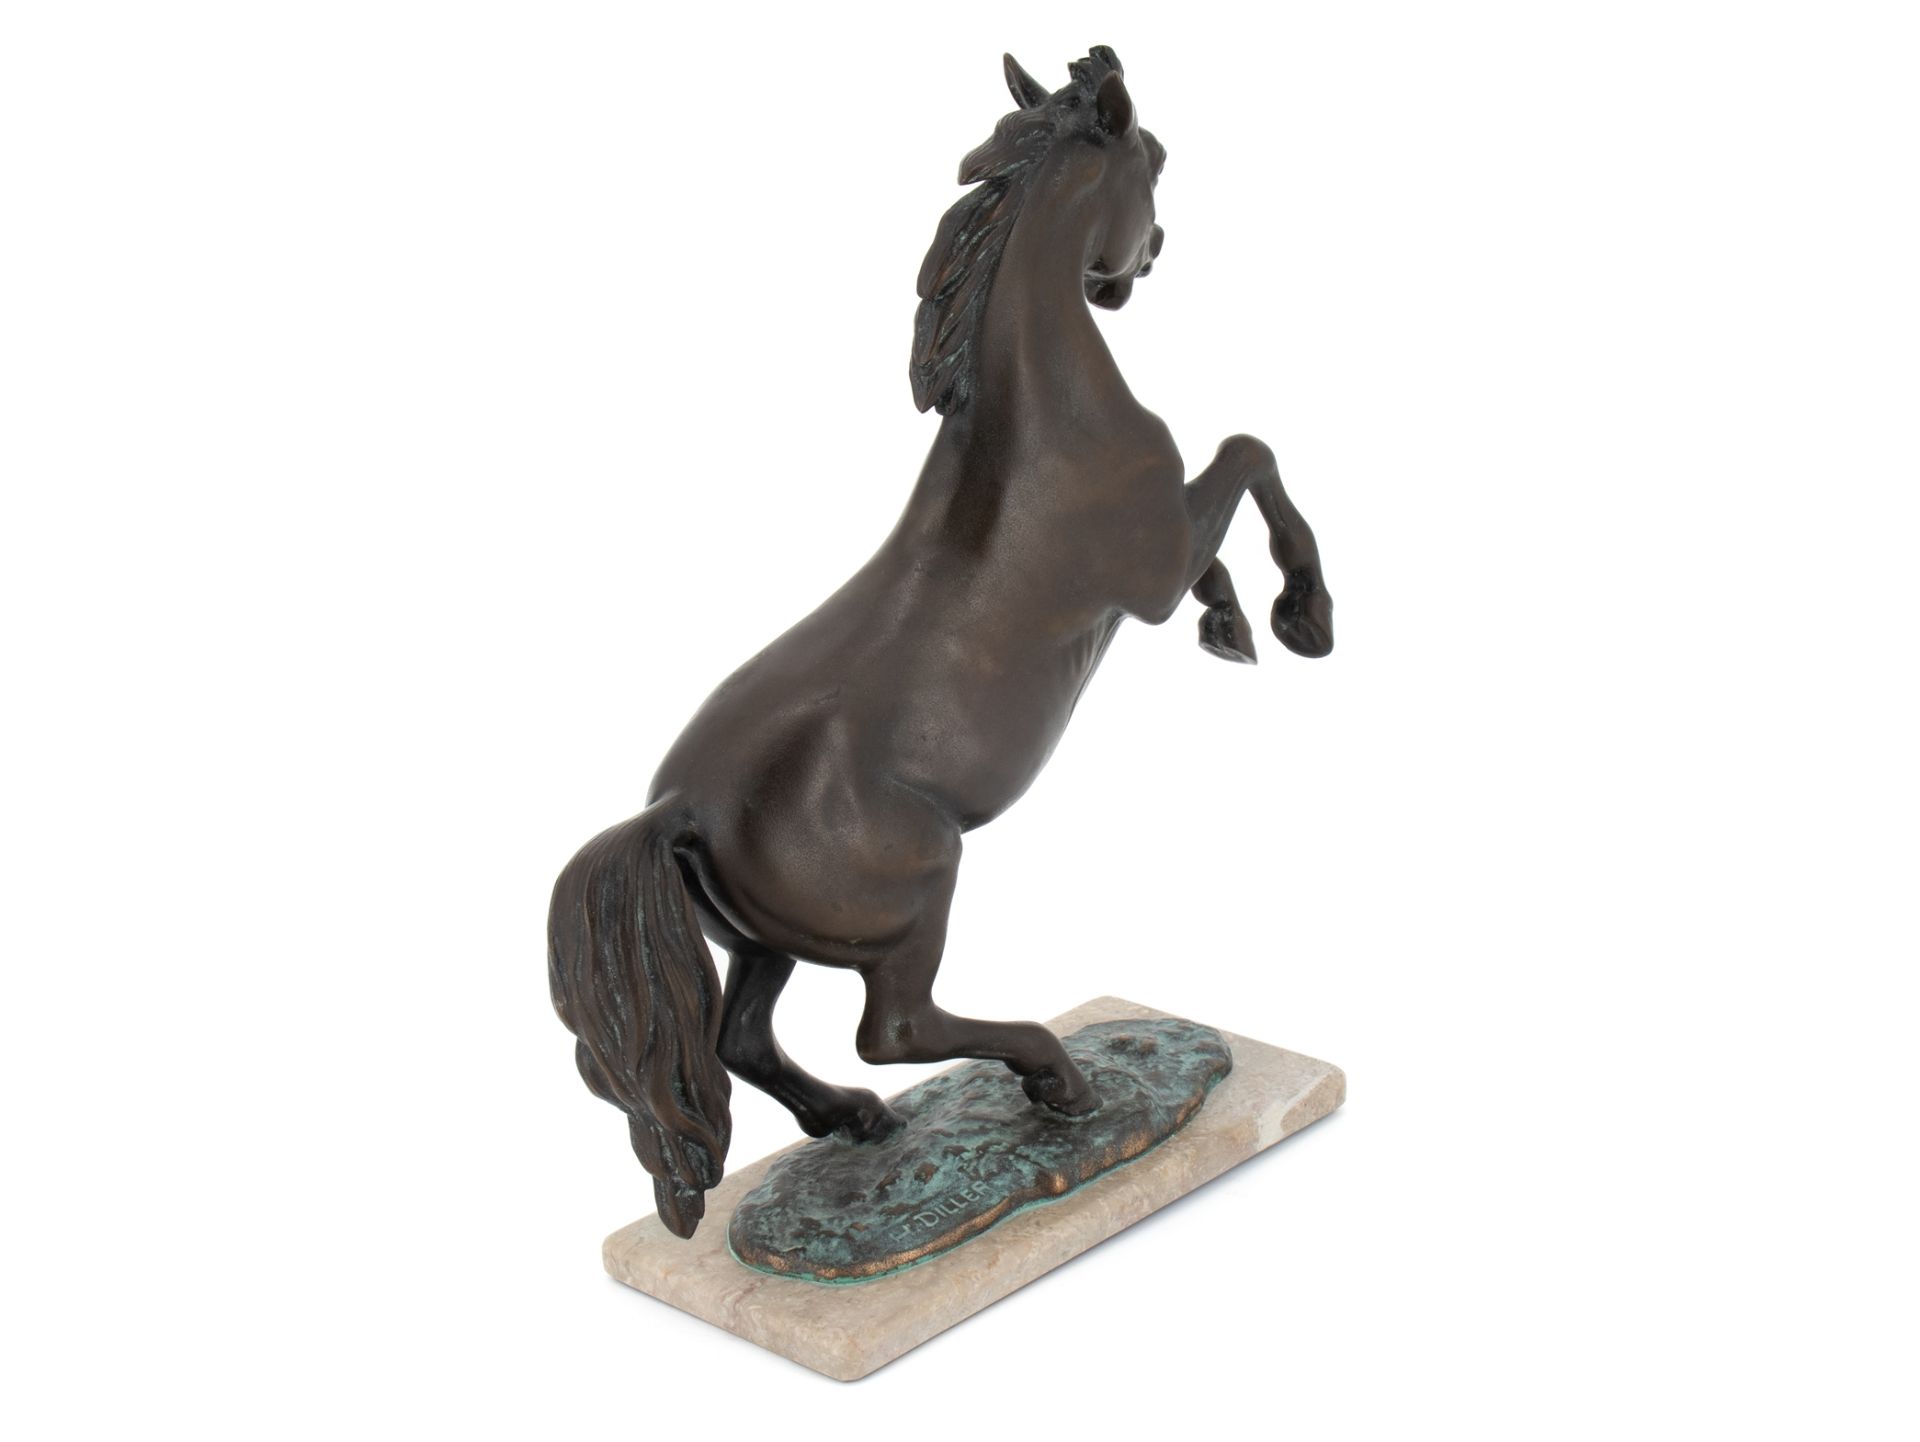 Diller Helmut (1911 - 1984), Bronze sculpture "Steigendes Pferd" (Rising Horse) - Image 4 of 9